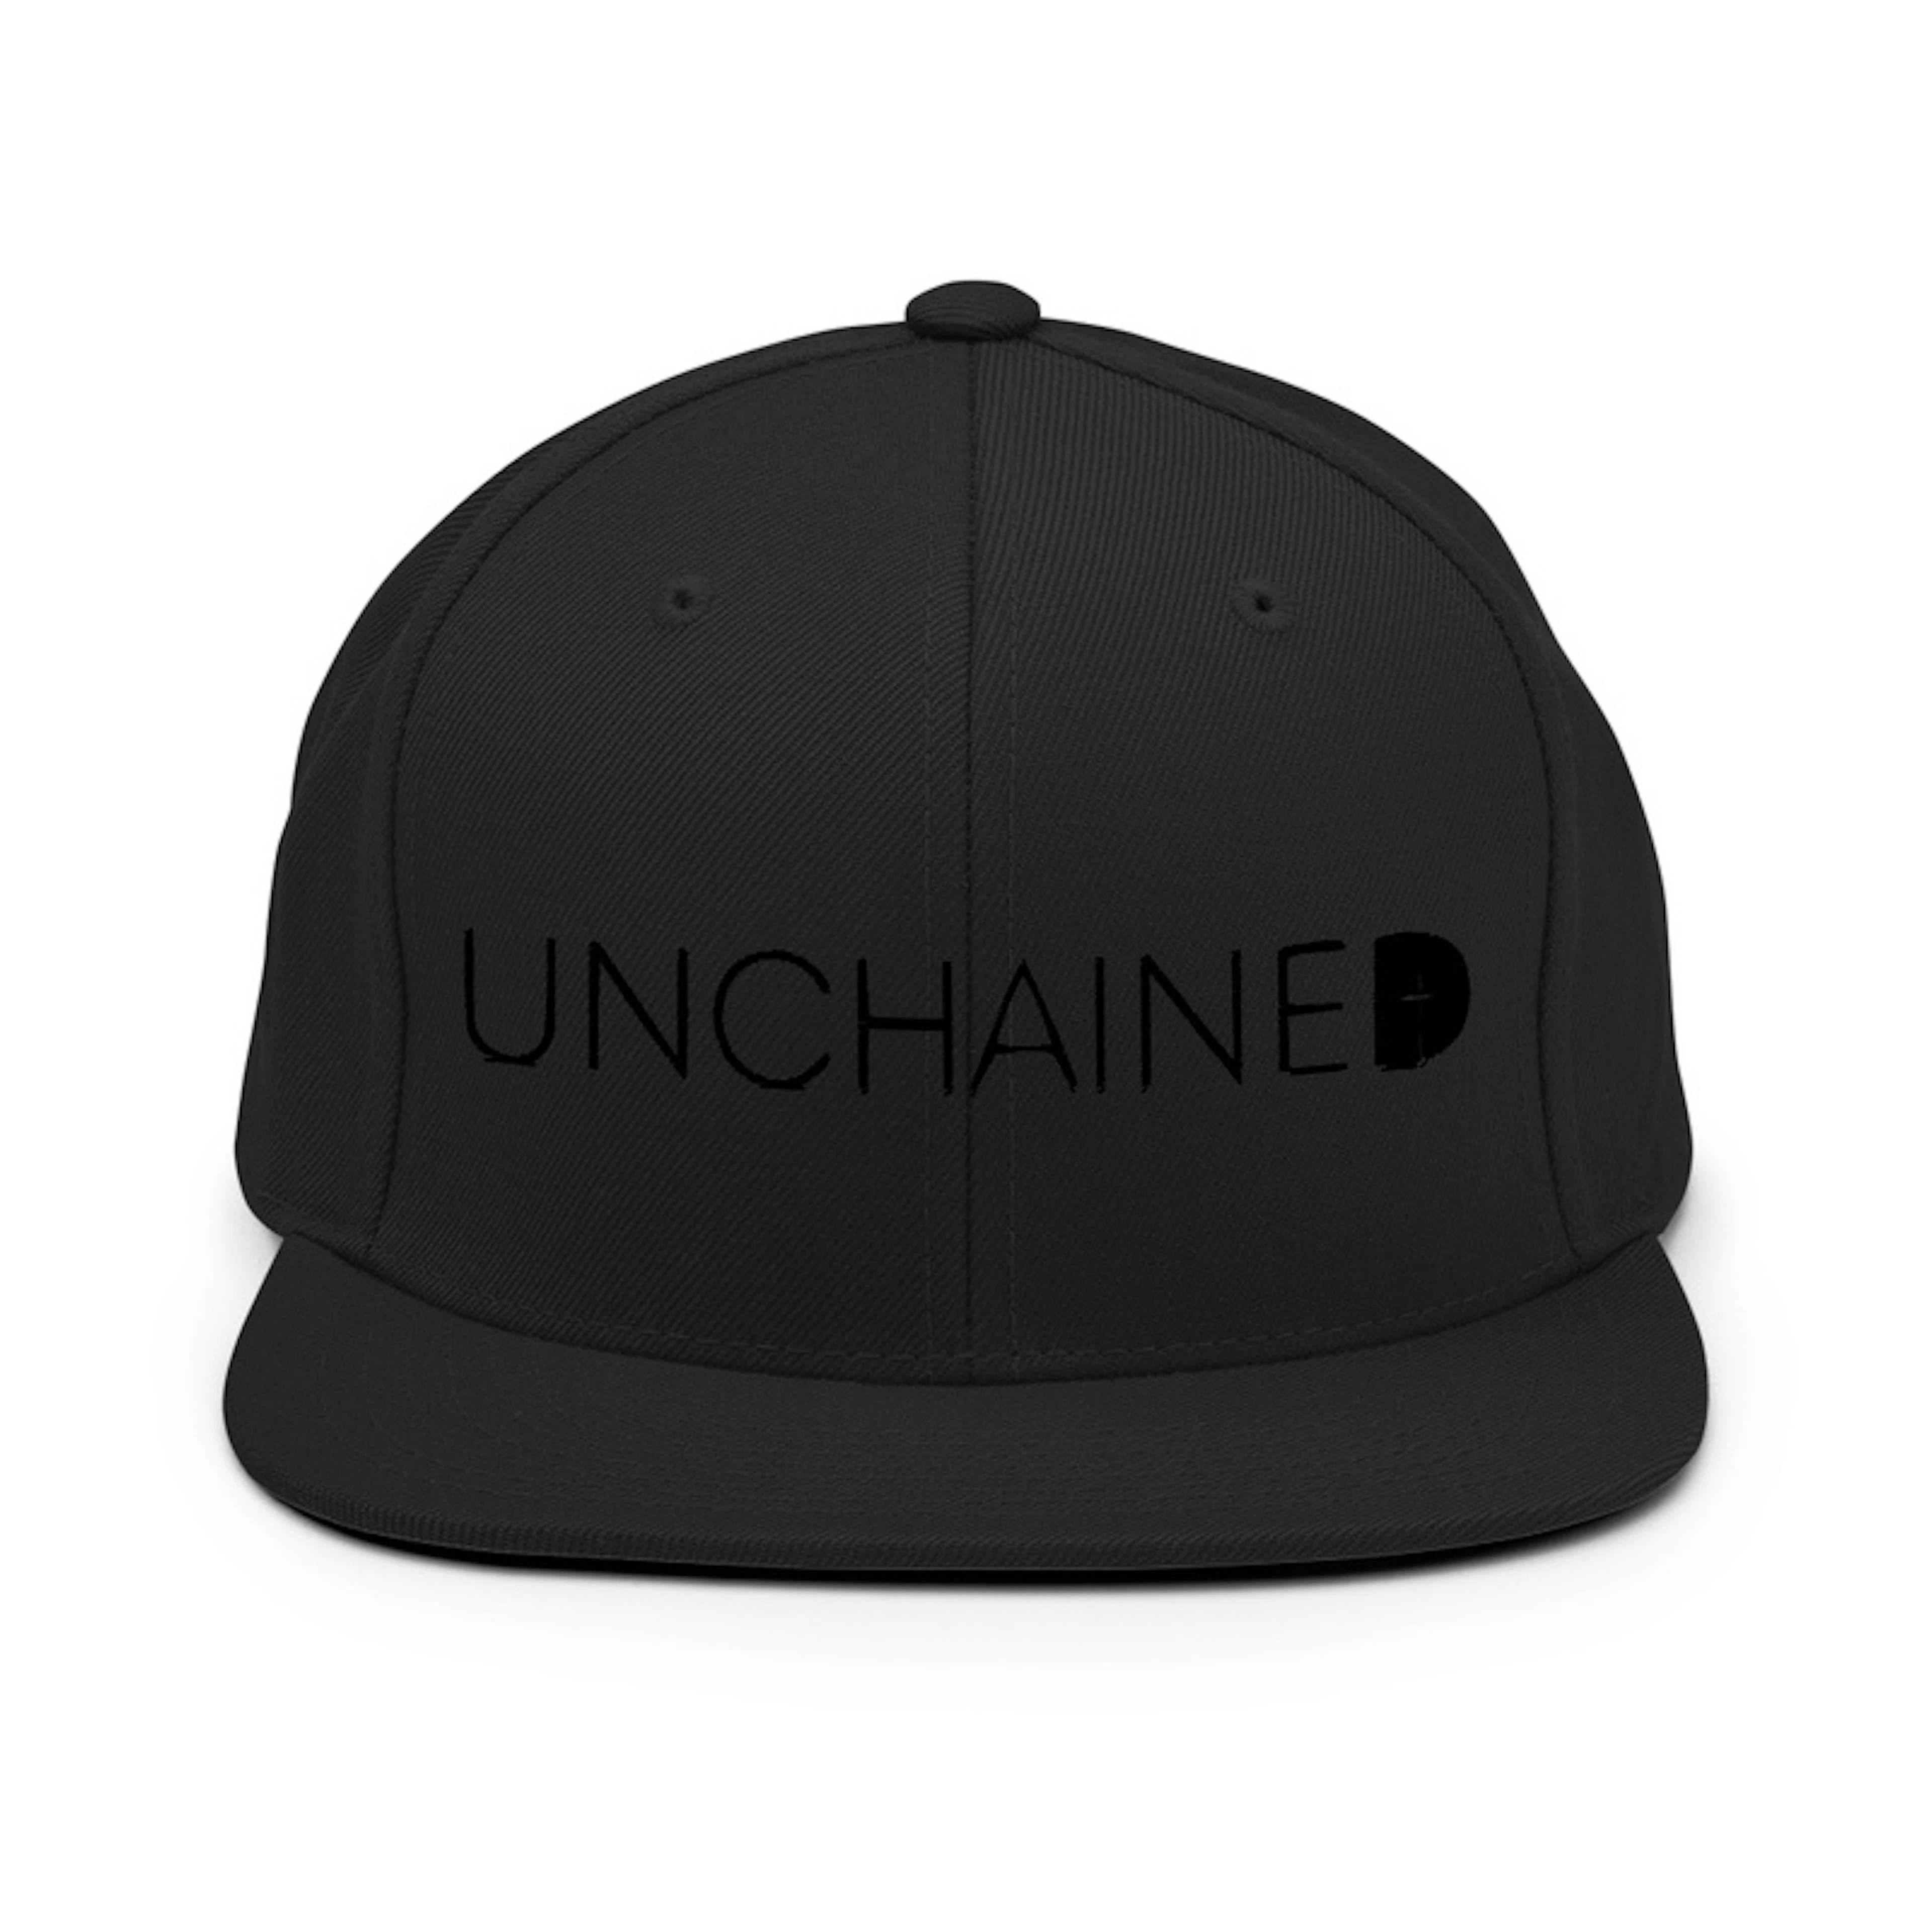 Unchained - Snapback